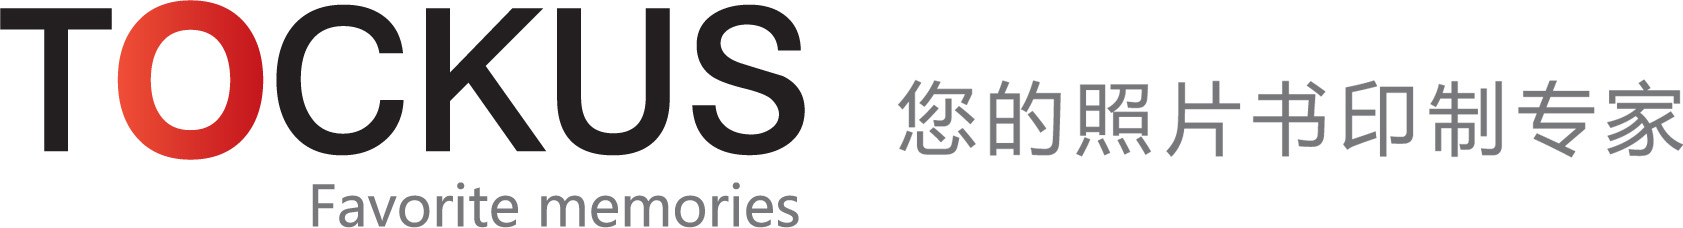 Tockus-logo